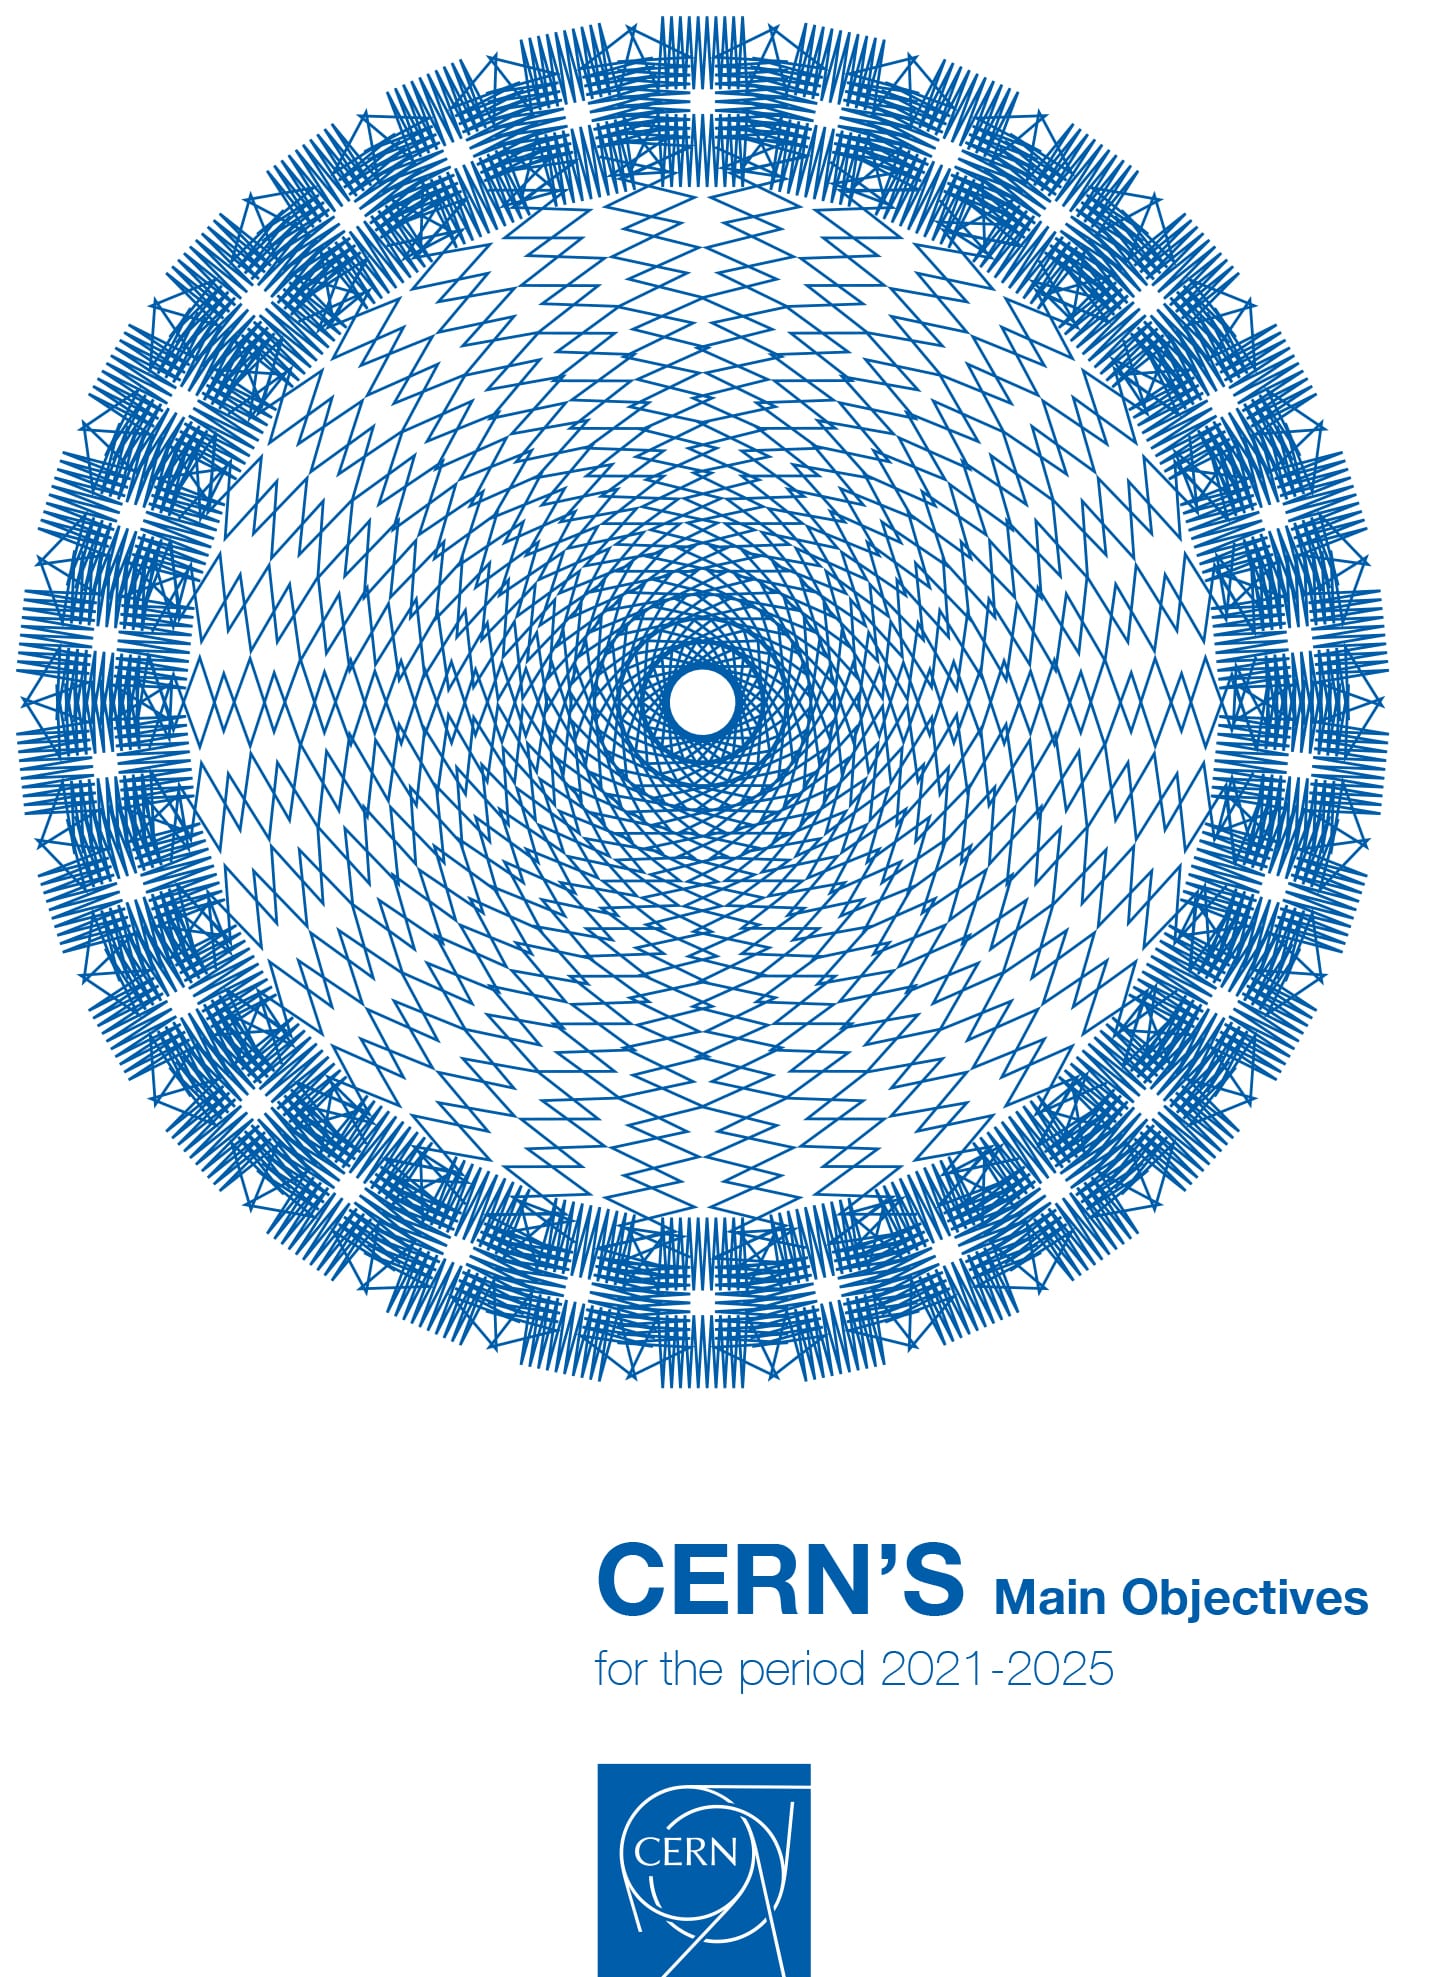 CERN's main objectives for 20212025 CERN